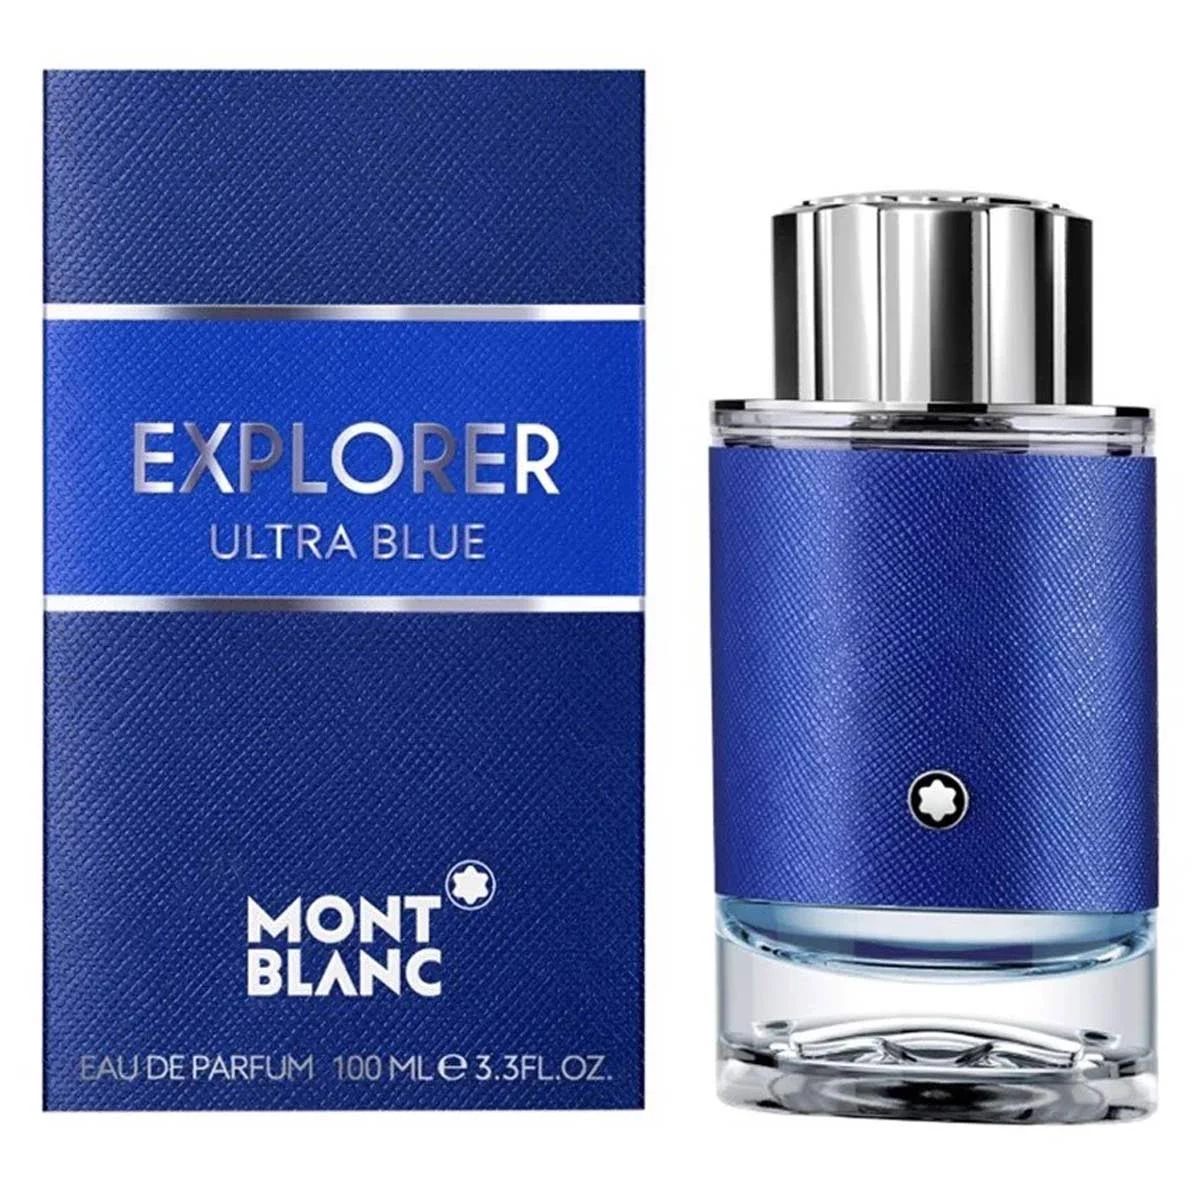 MONTBLANC EXPLORER ULTRA BLUE EDP100ml